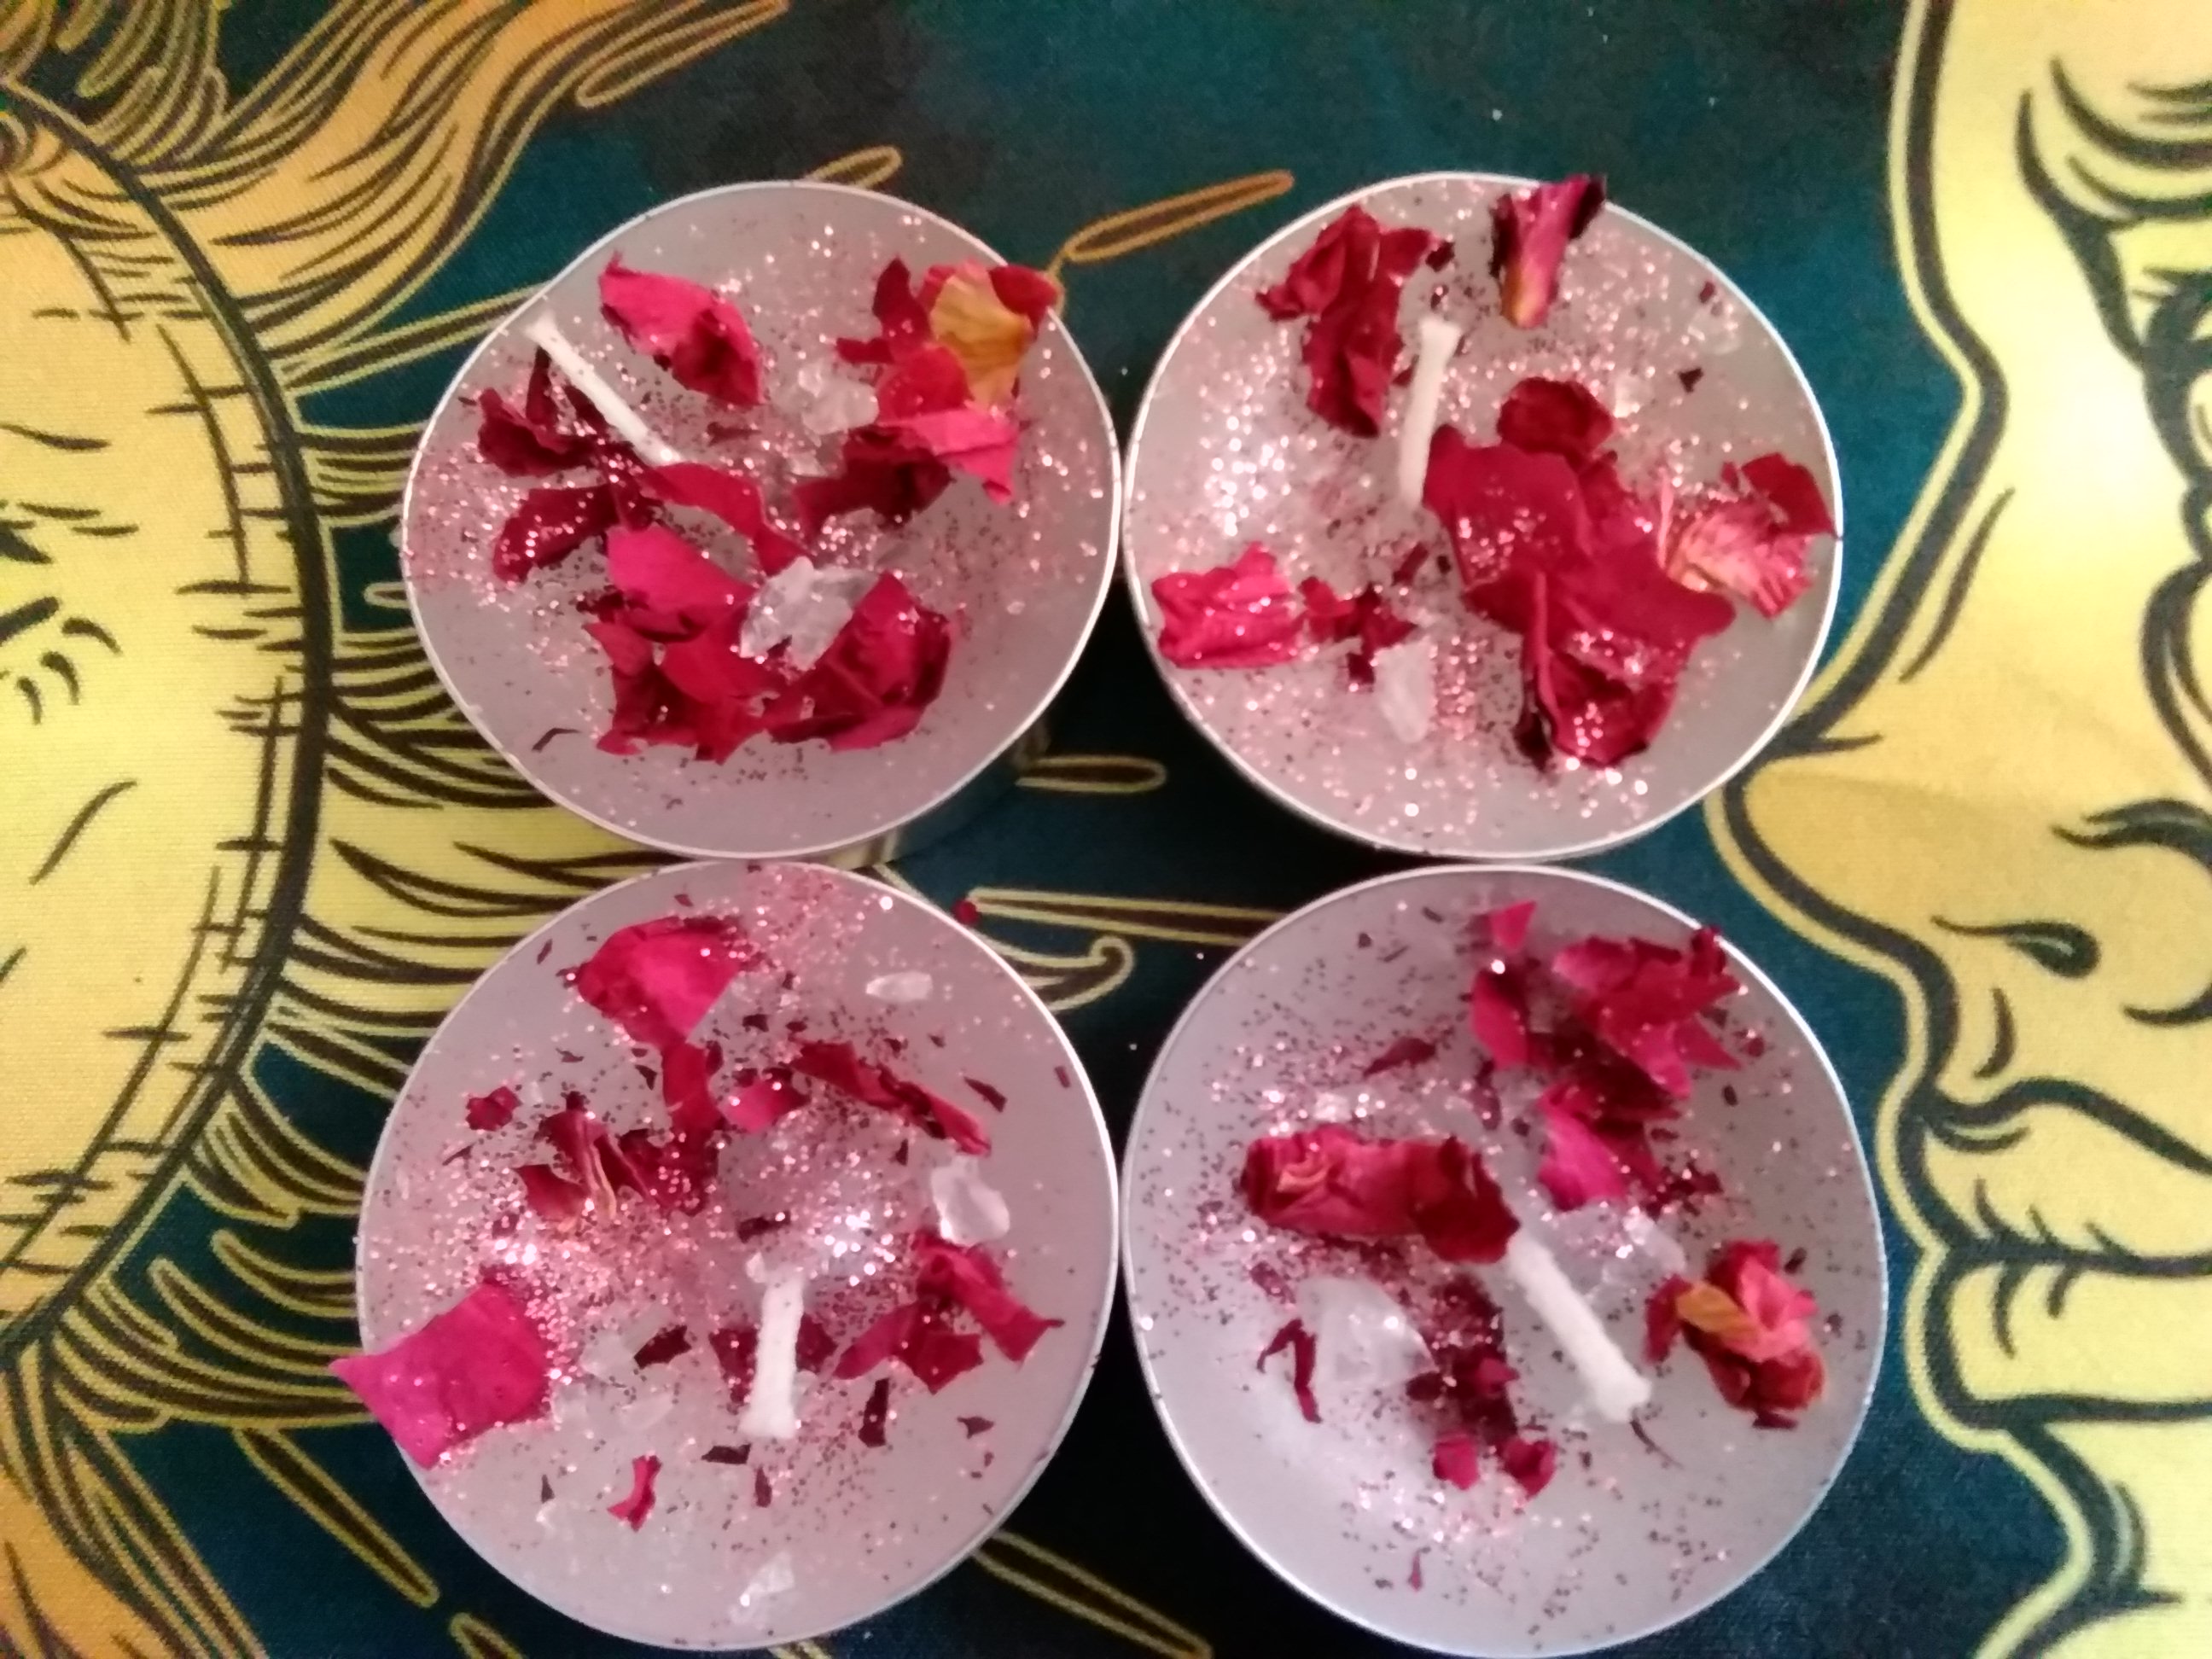 SpellBinders Rose Quartz tea light spell candles 4 pack - Click Image to Close